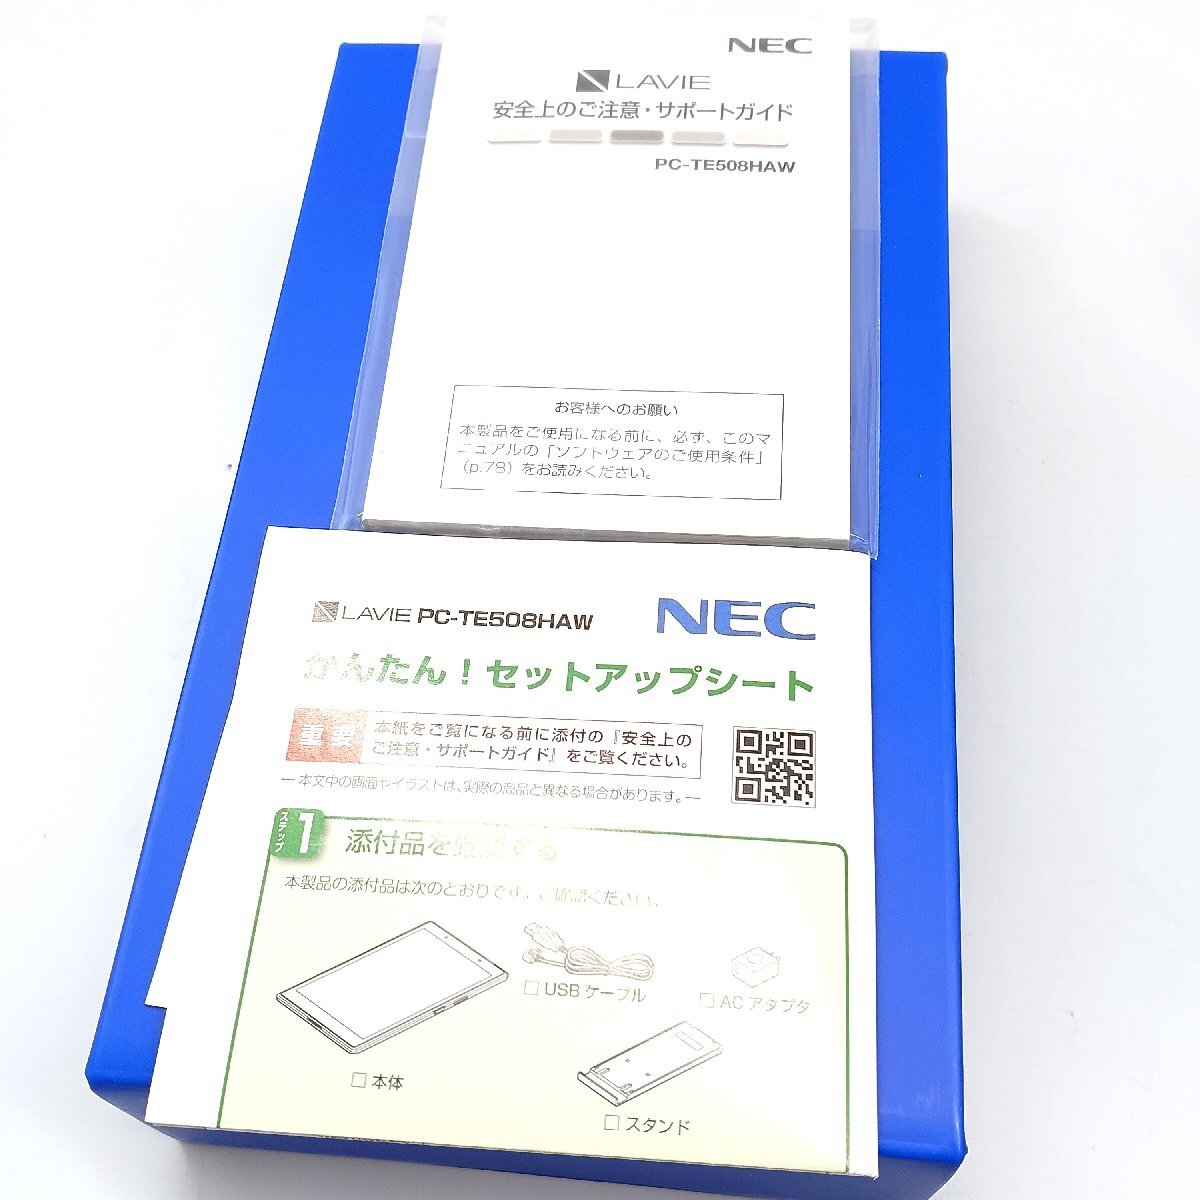 NEC(エヌイーシー) LaVie Tab E TE508/HAW 16GB ホワイト PC-TE508HAW Androidタブレット ホワイト OS Android7.1.1 初期化済み MB fe ABC1_画像10